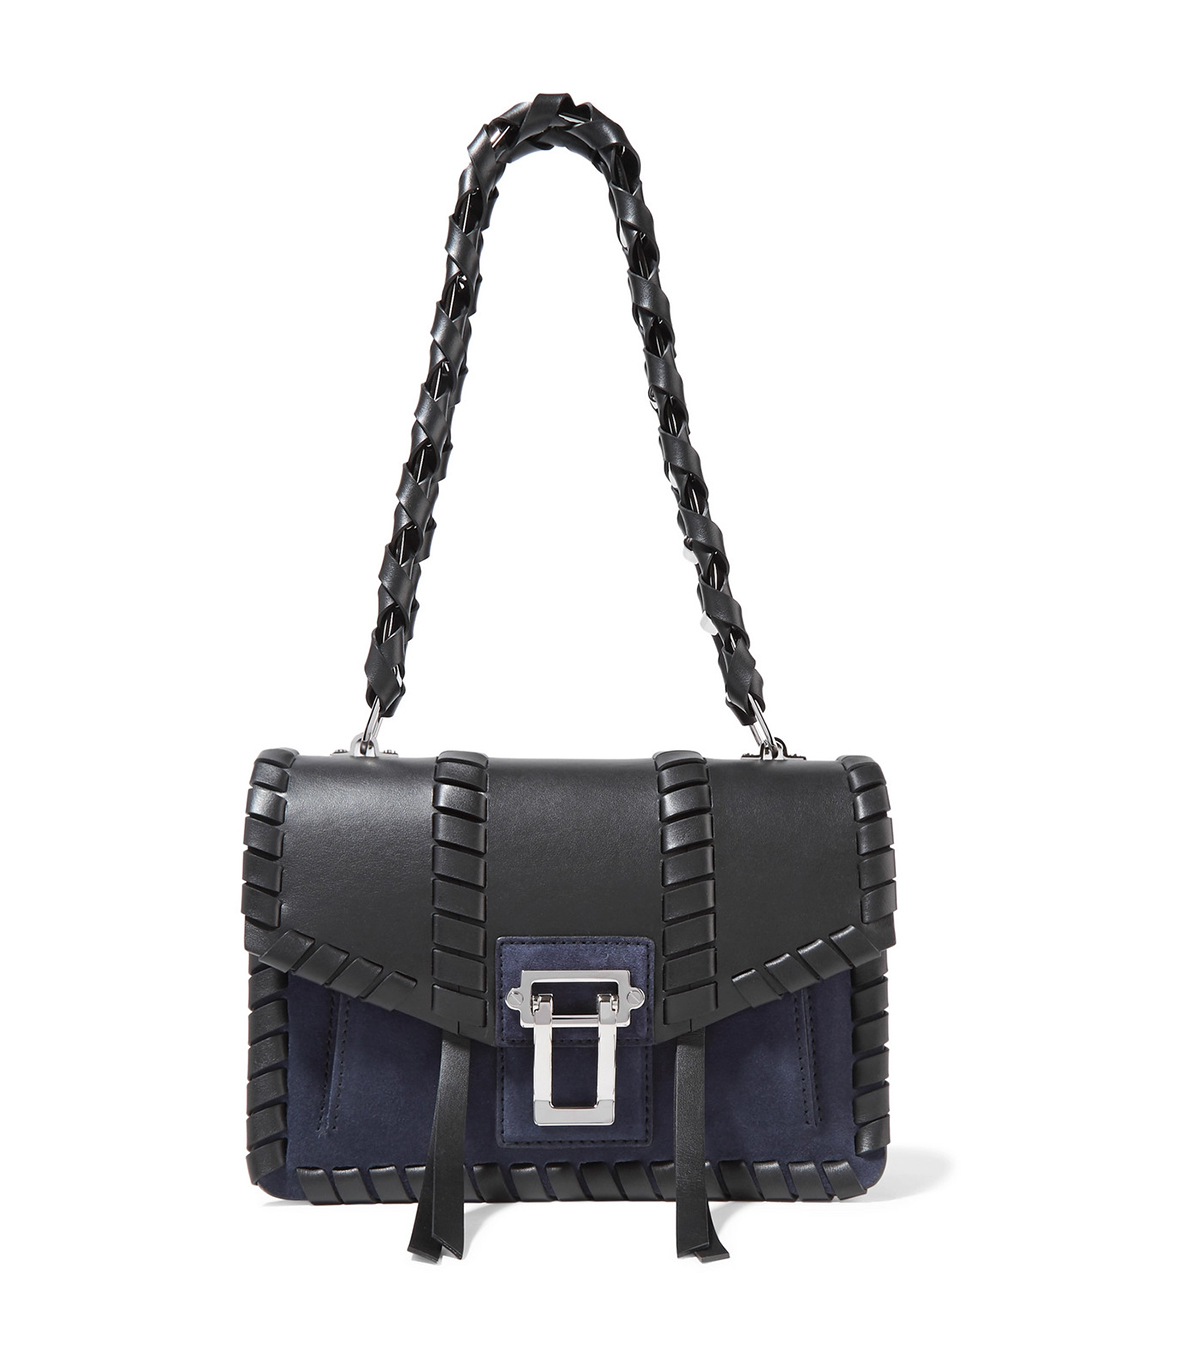 Louis Vuitton Offers Not-So-Luxurious Bag Repair Service – Consumerist